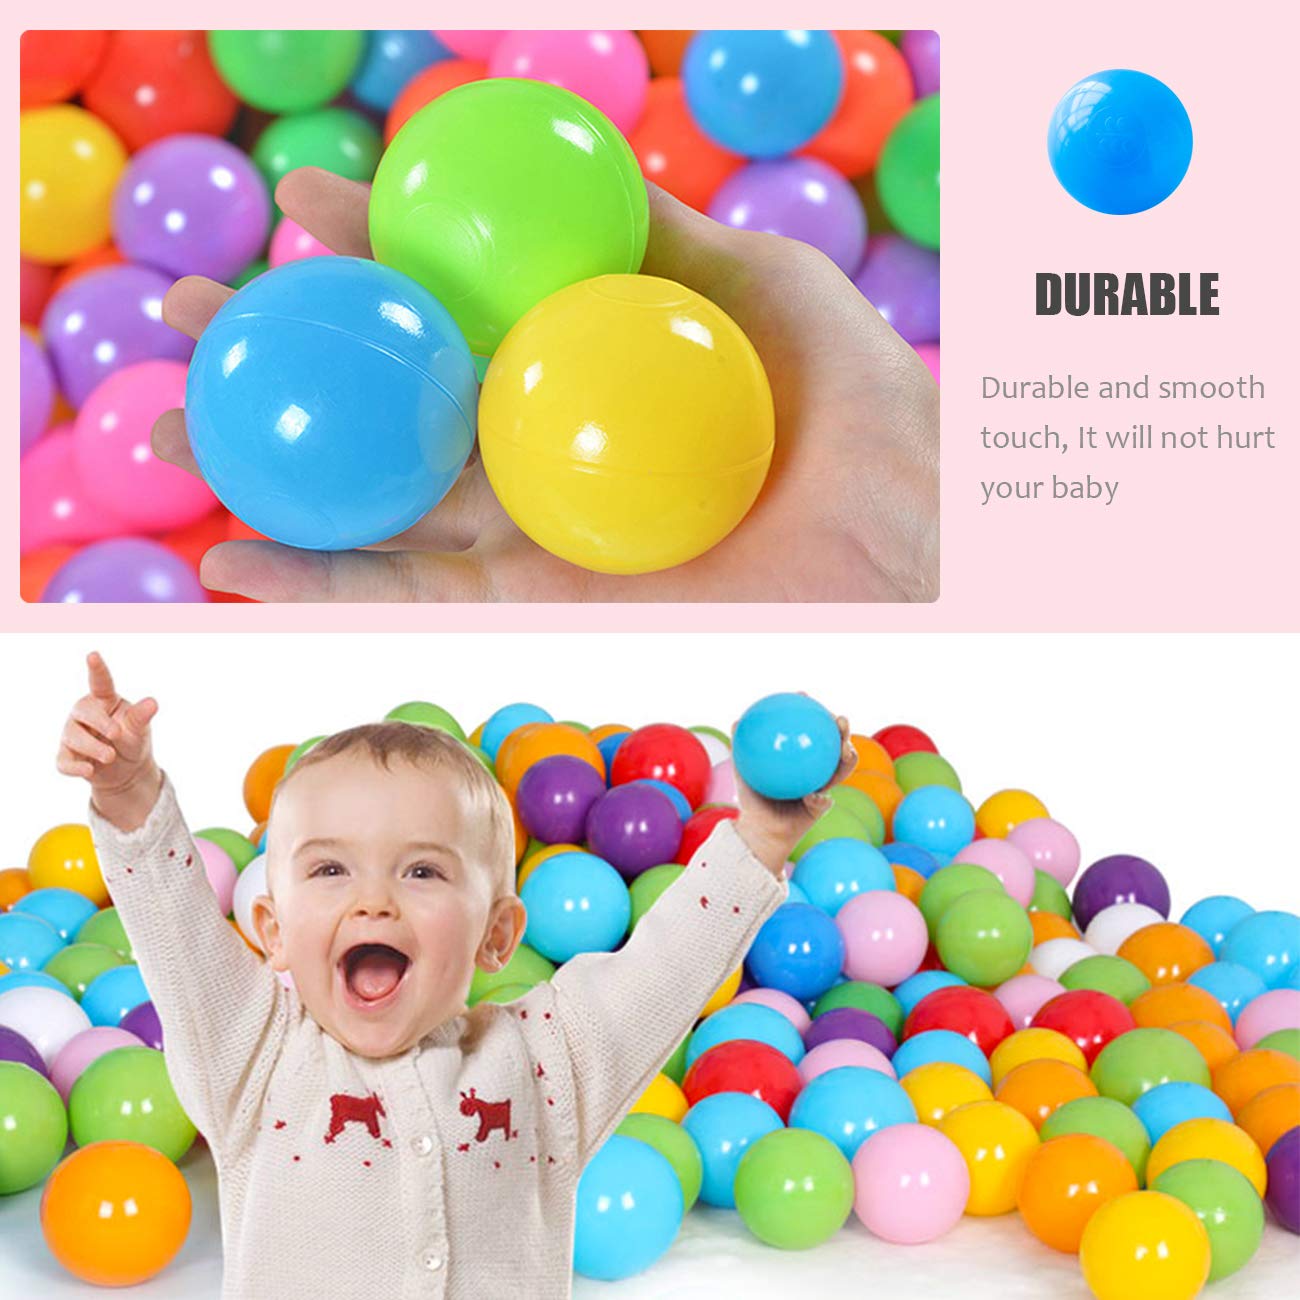 Dadoudou Kids Ball Pit Balls, 100pcs Colorful Fun Phthalate Free BPA Free Crush Proof Balls Soft Plastic Air-Filled Ocean Ball Playballs for Baby Kids Tent Swim Toys Ball